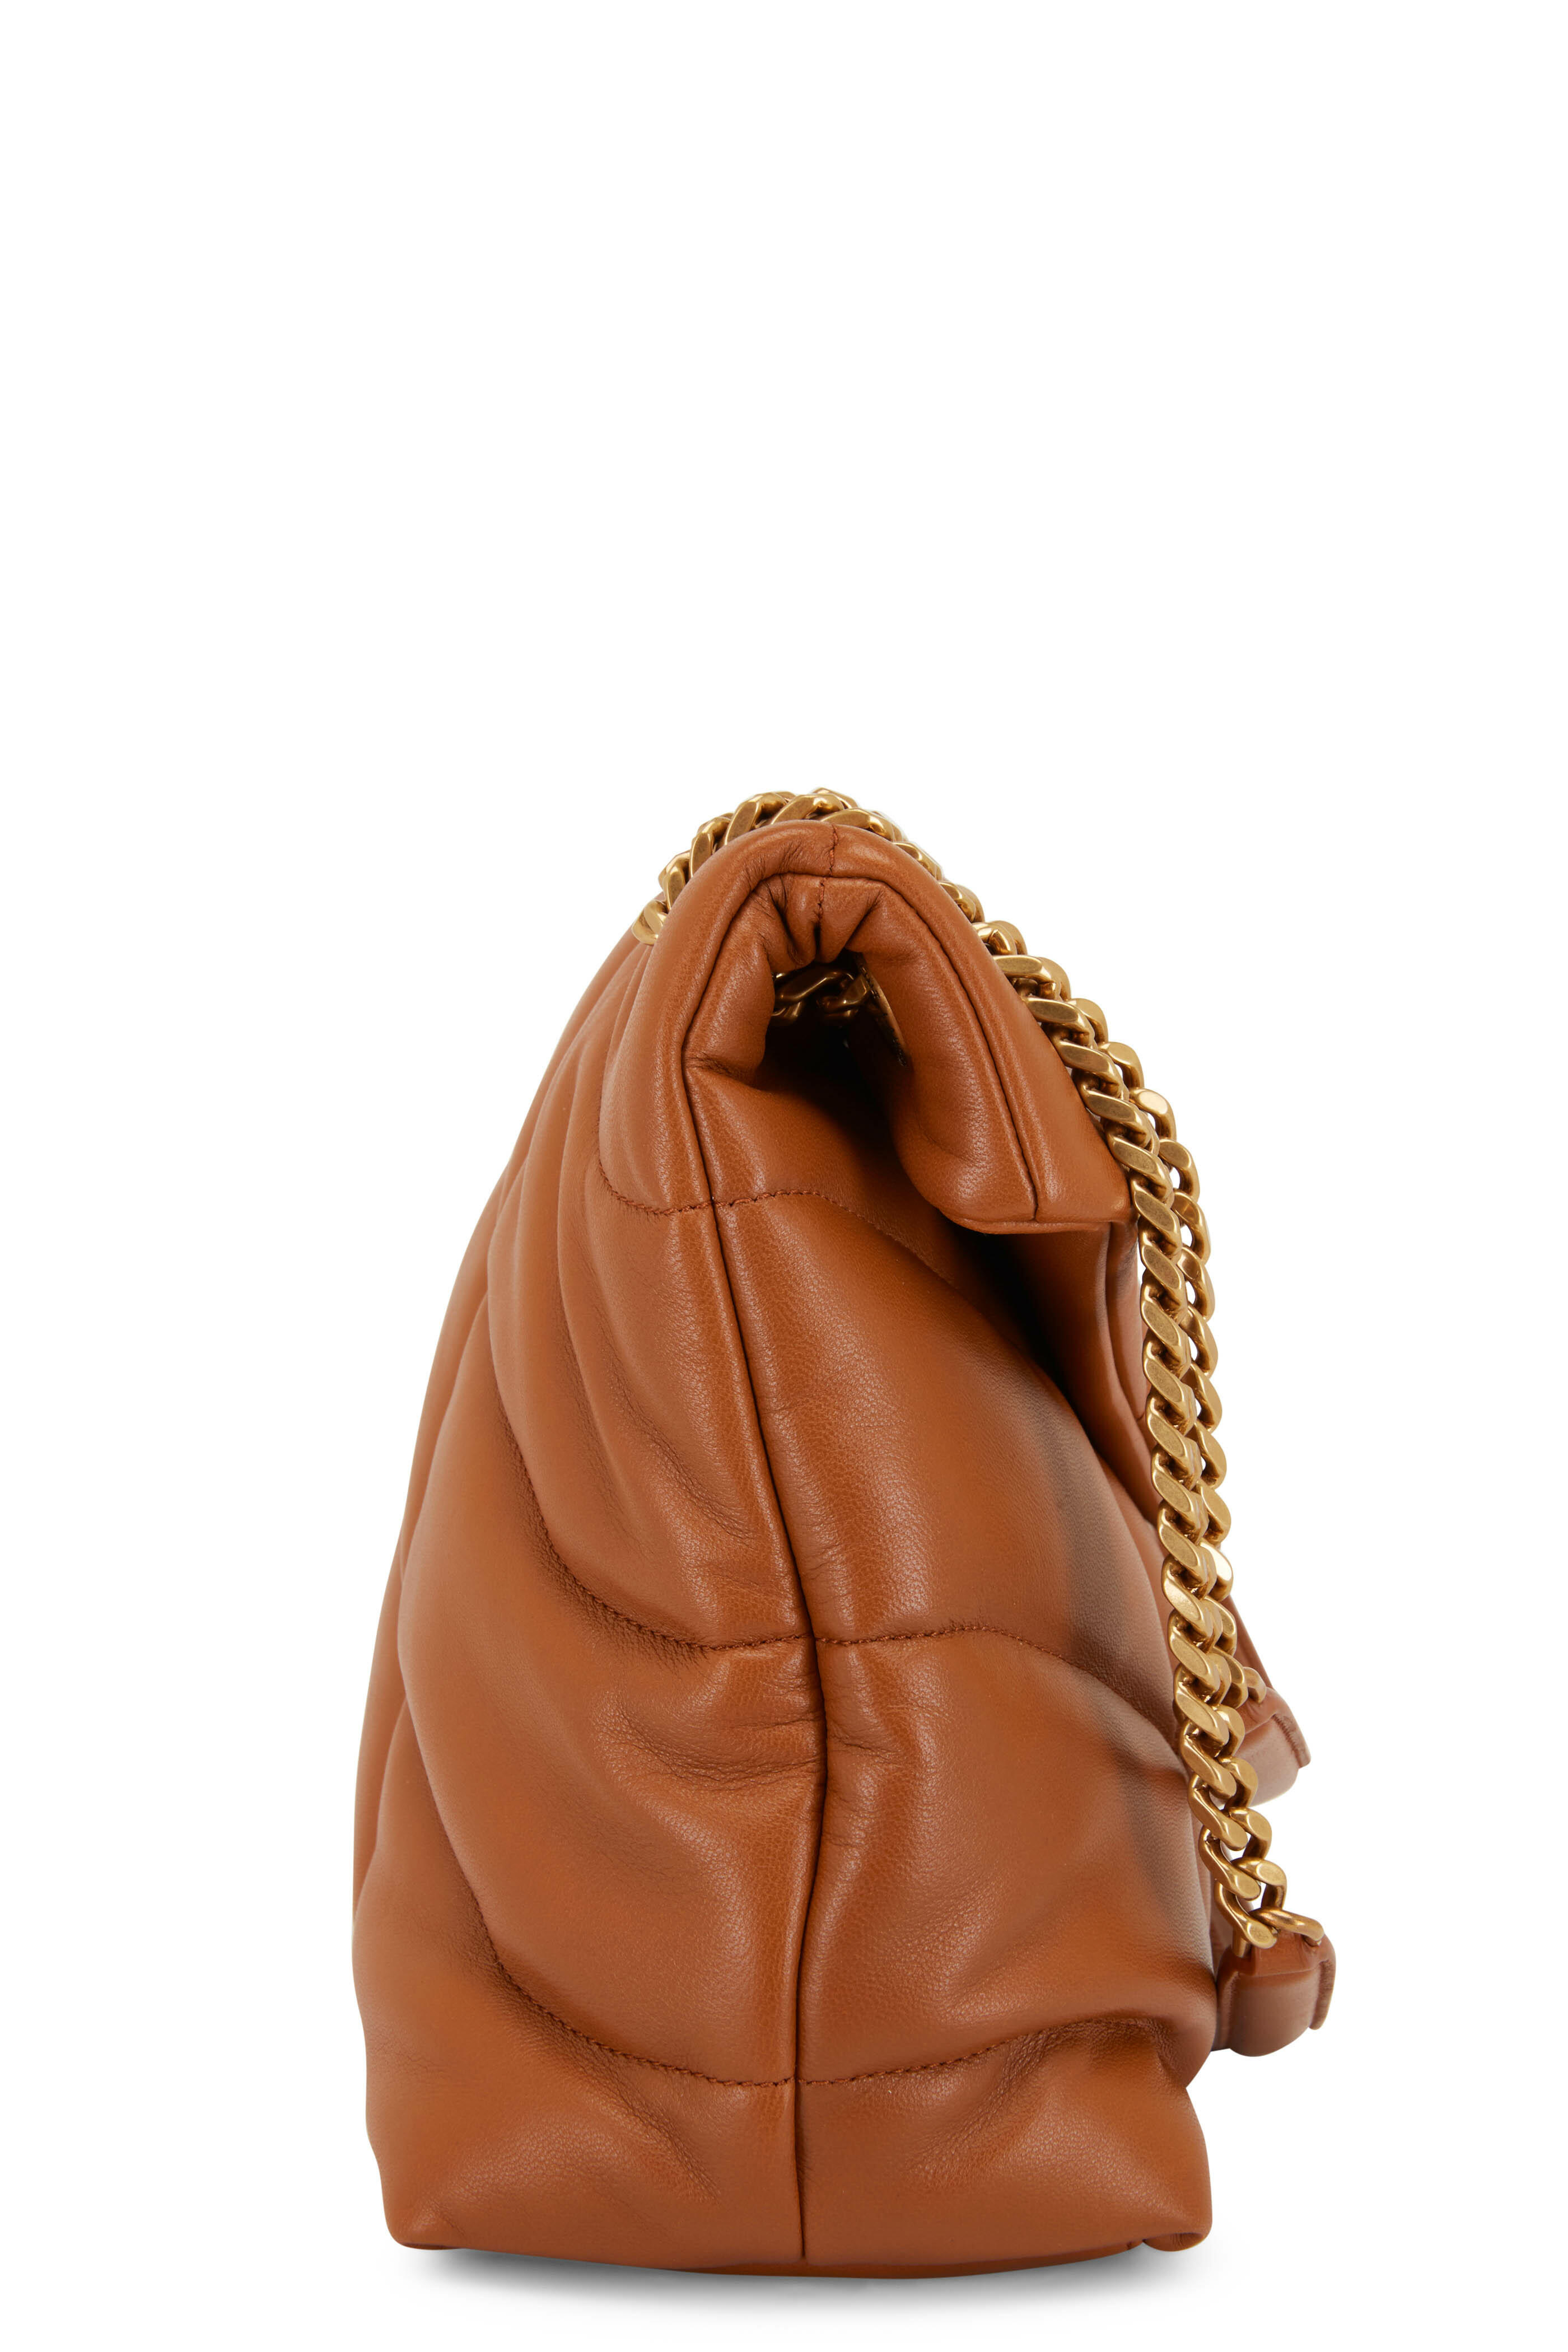 Saint Laurent - Loulou Dark Honey Leather Medium Shoulder Bag